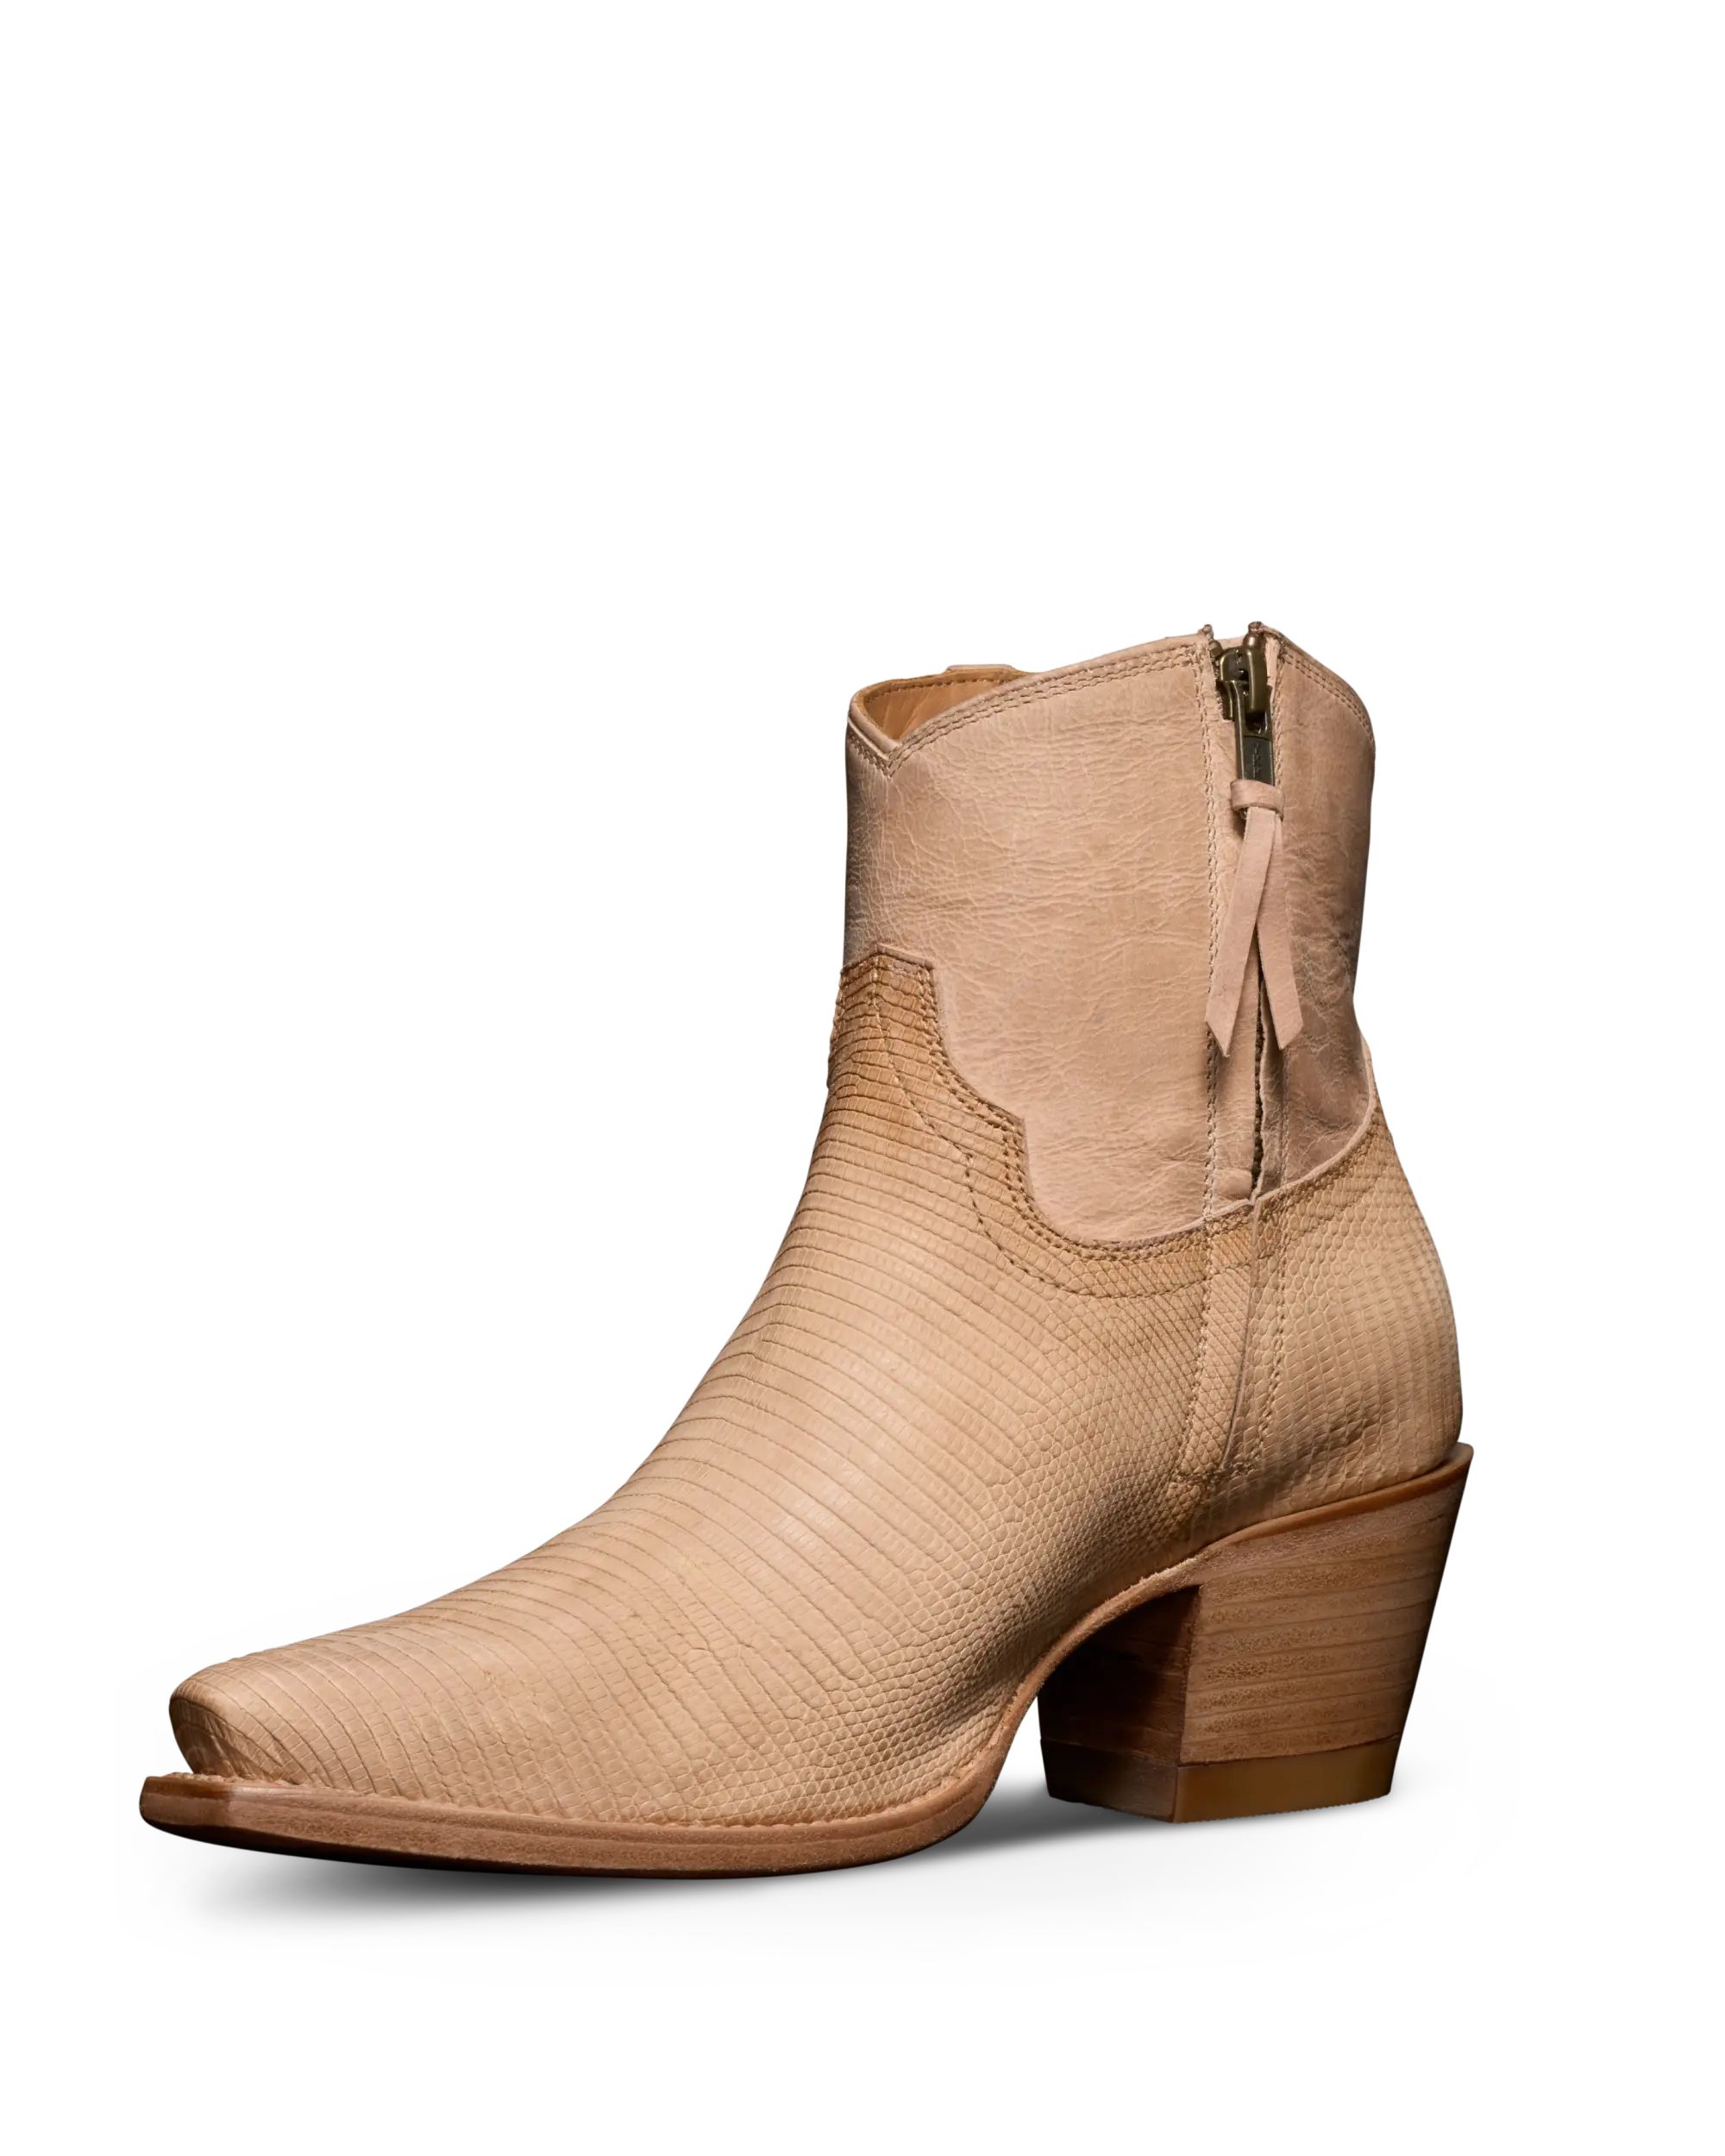 Women's Ankle Boots |  The Daisy - Sand Relic | Tecovas | Tecovas